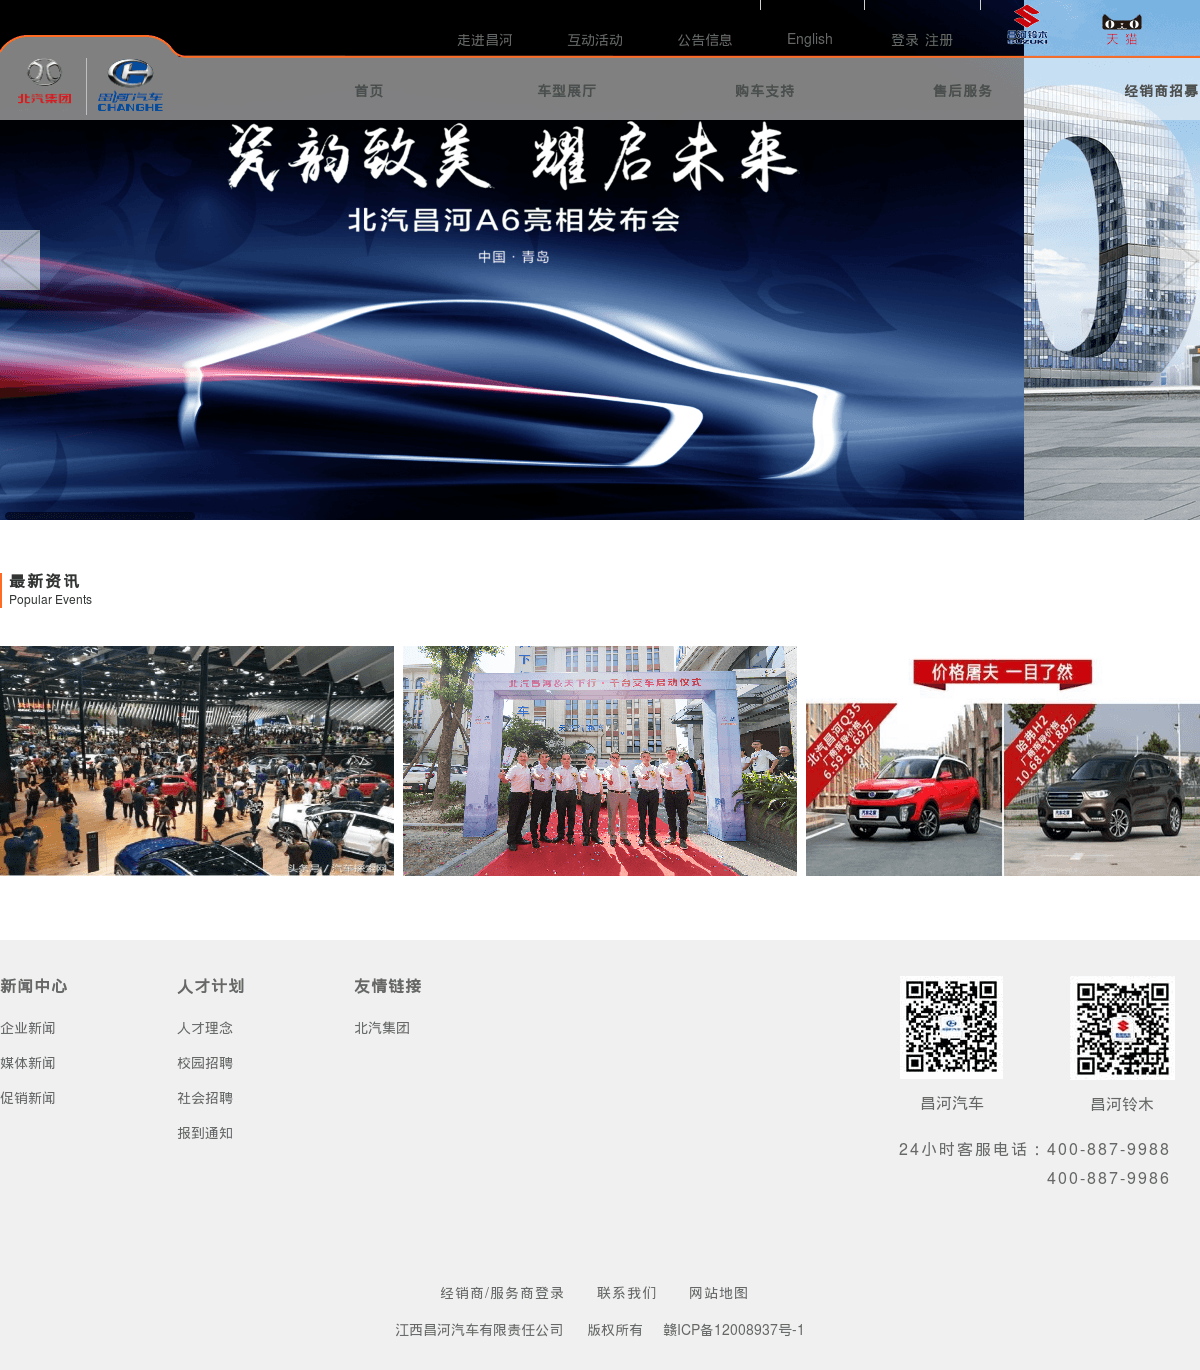 Changhe Logo - Jiangxi Changhe Suzuki Autombile Competitors, Revenue and Employees ...